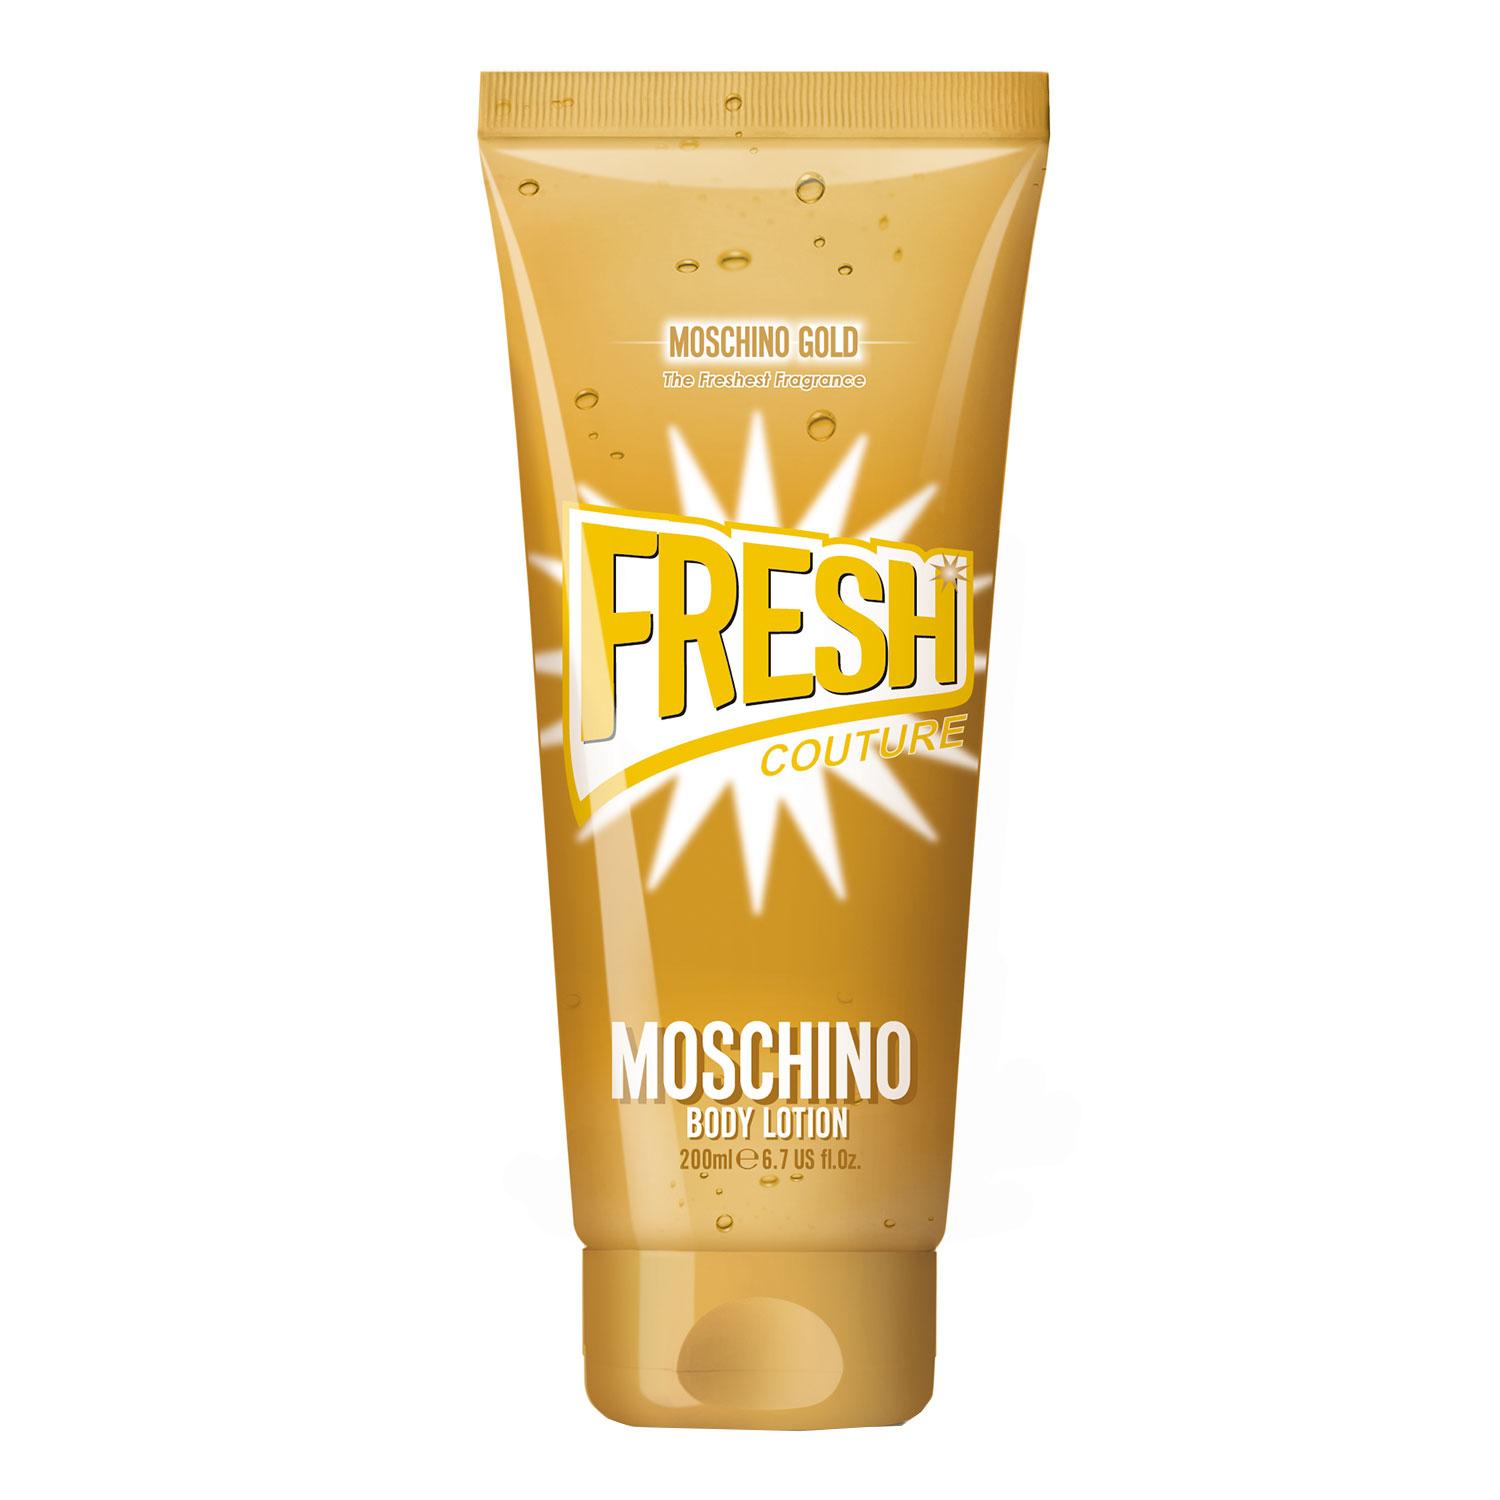 Gold Fresh Couture - The freshest Bath & Shower Gel